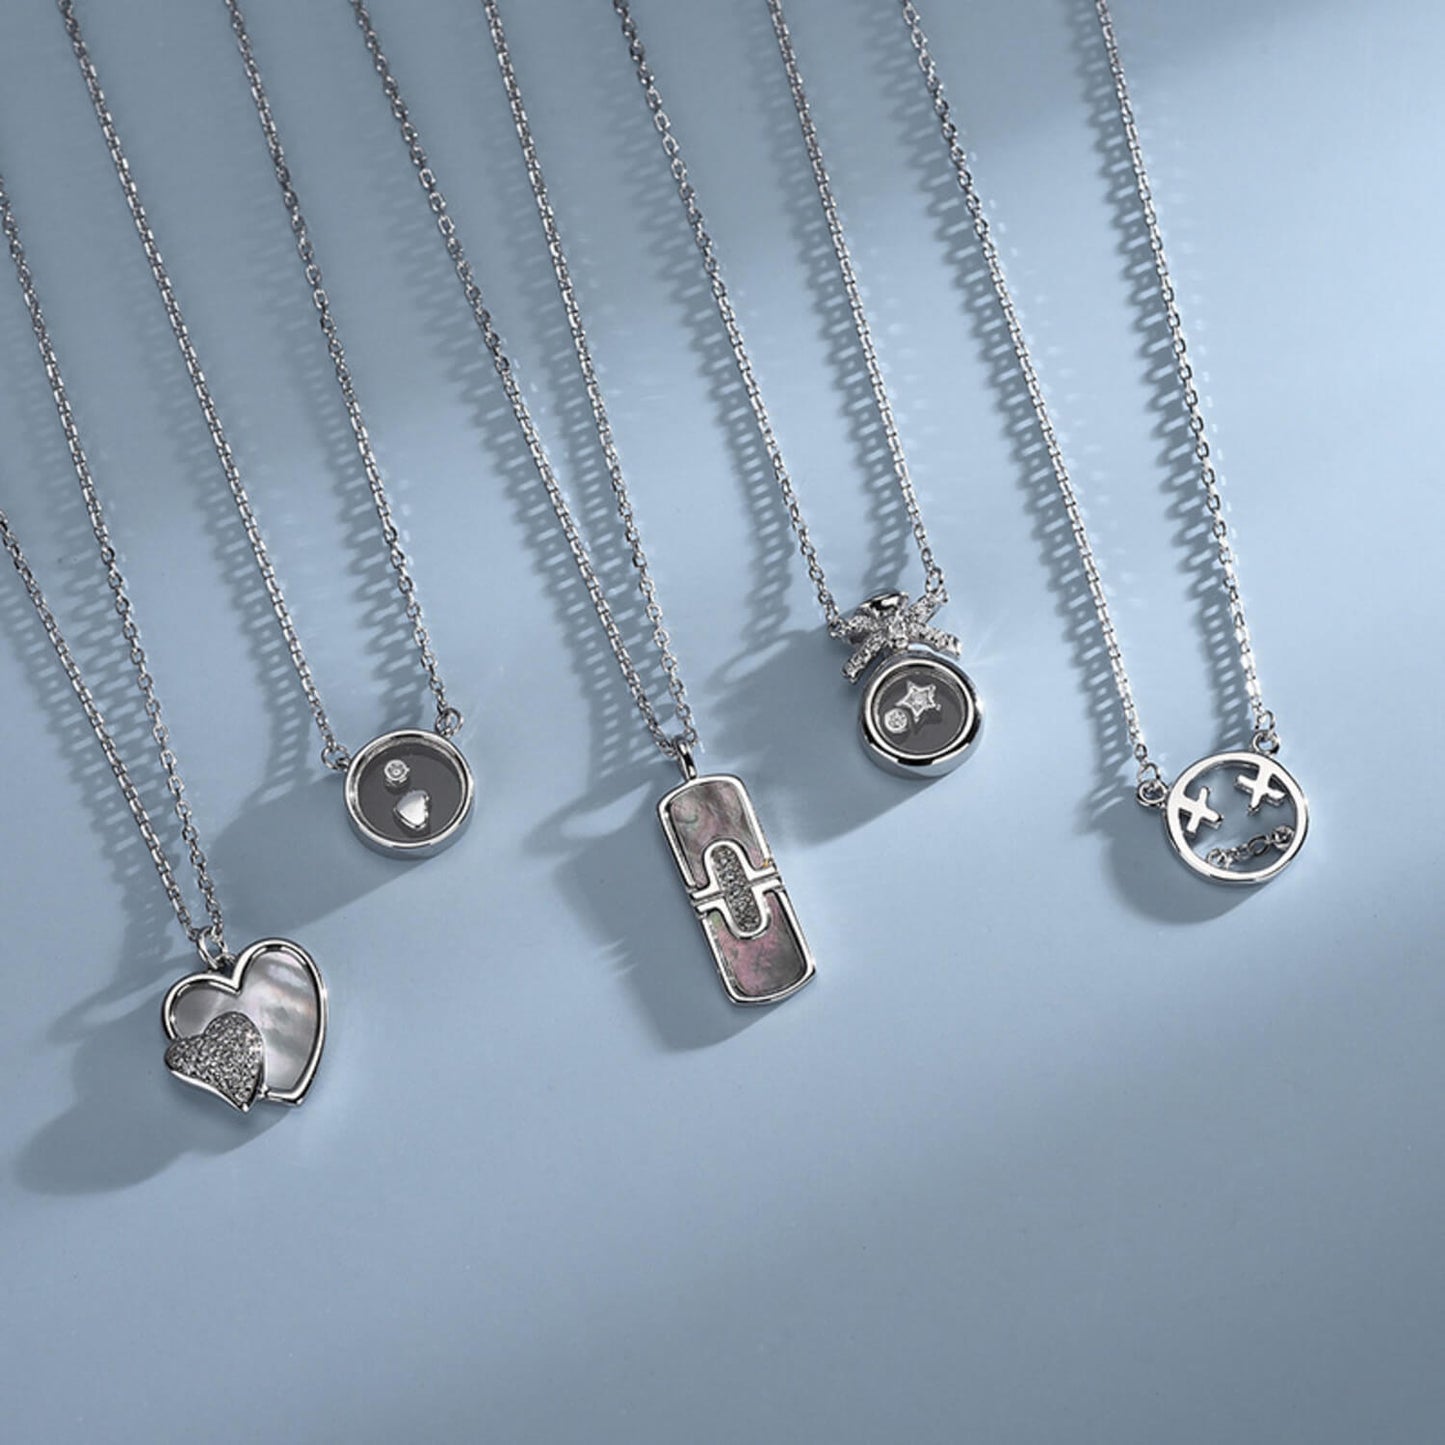 silver round pendant fashion jewelry